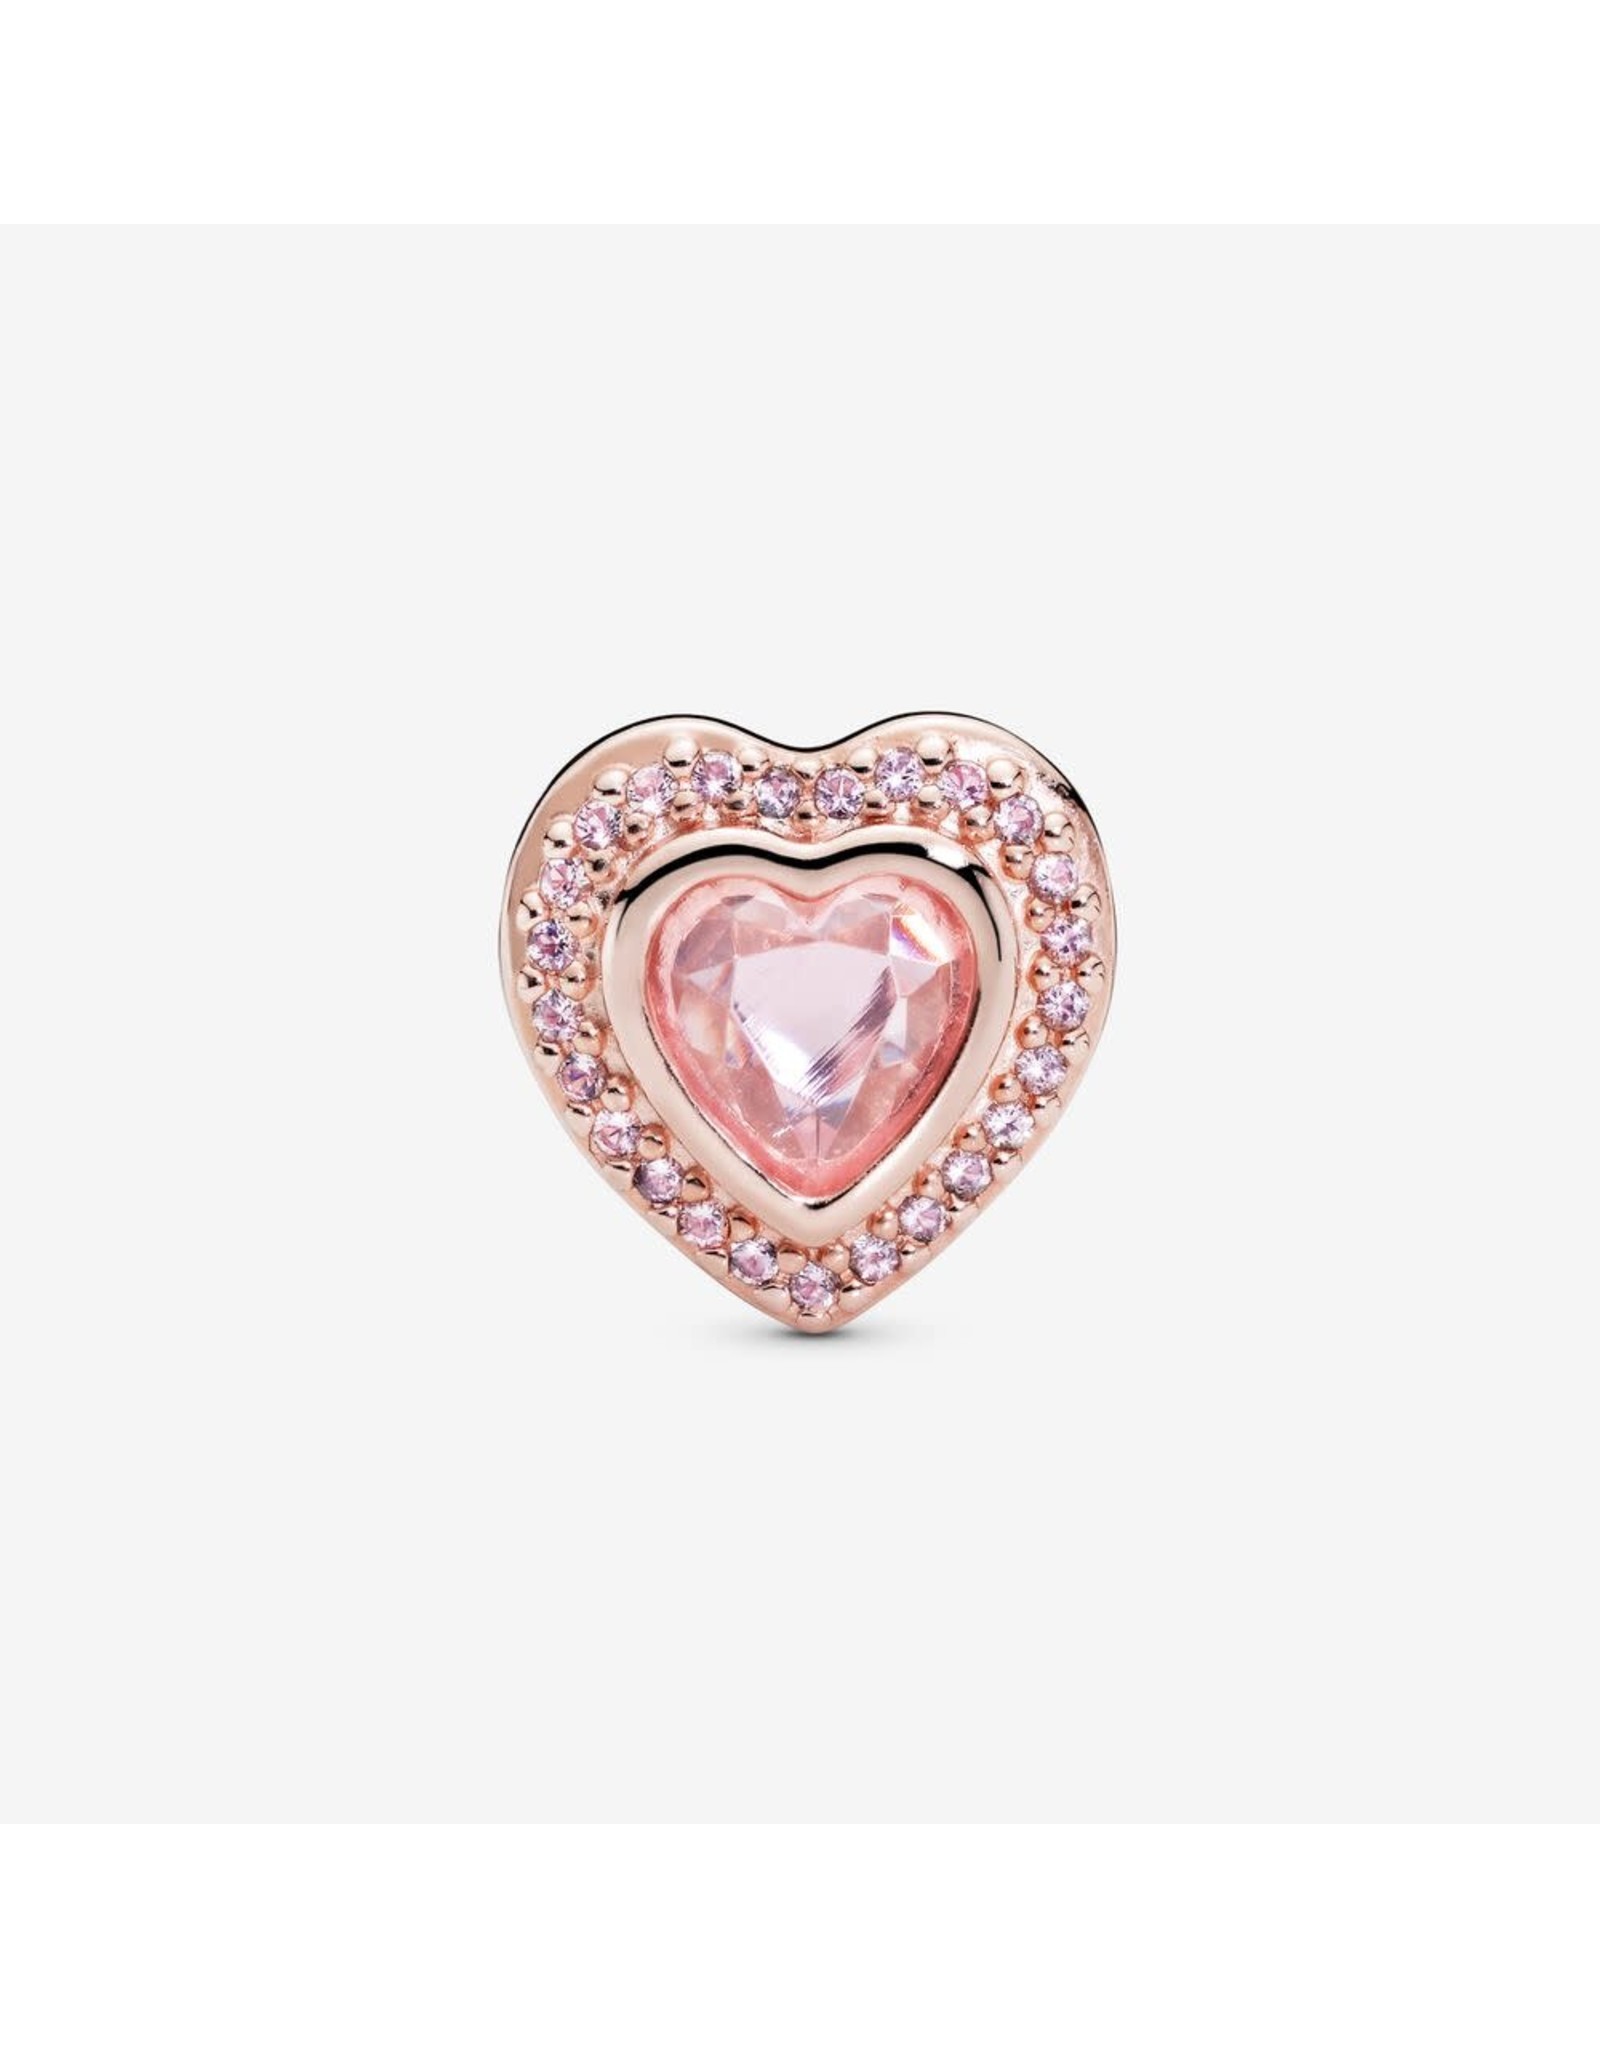 Pandora Pandora Charm,787608NPM, Heart Rose Gold, Pink Crystal